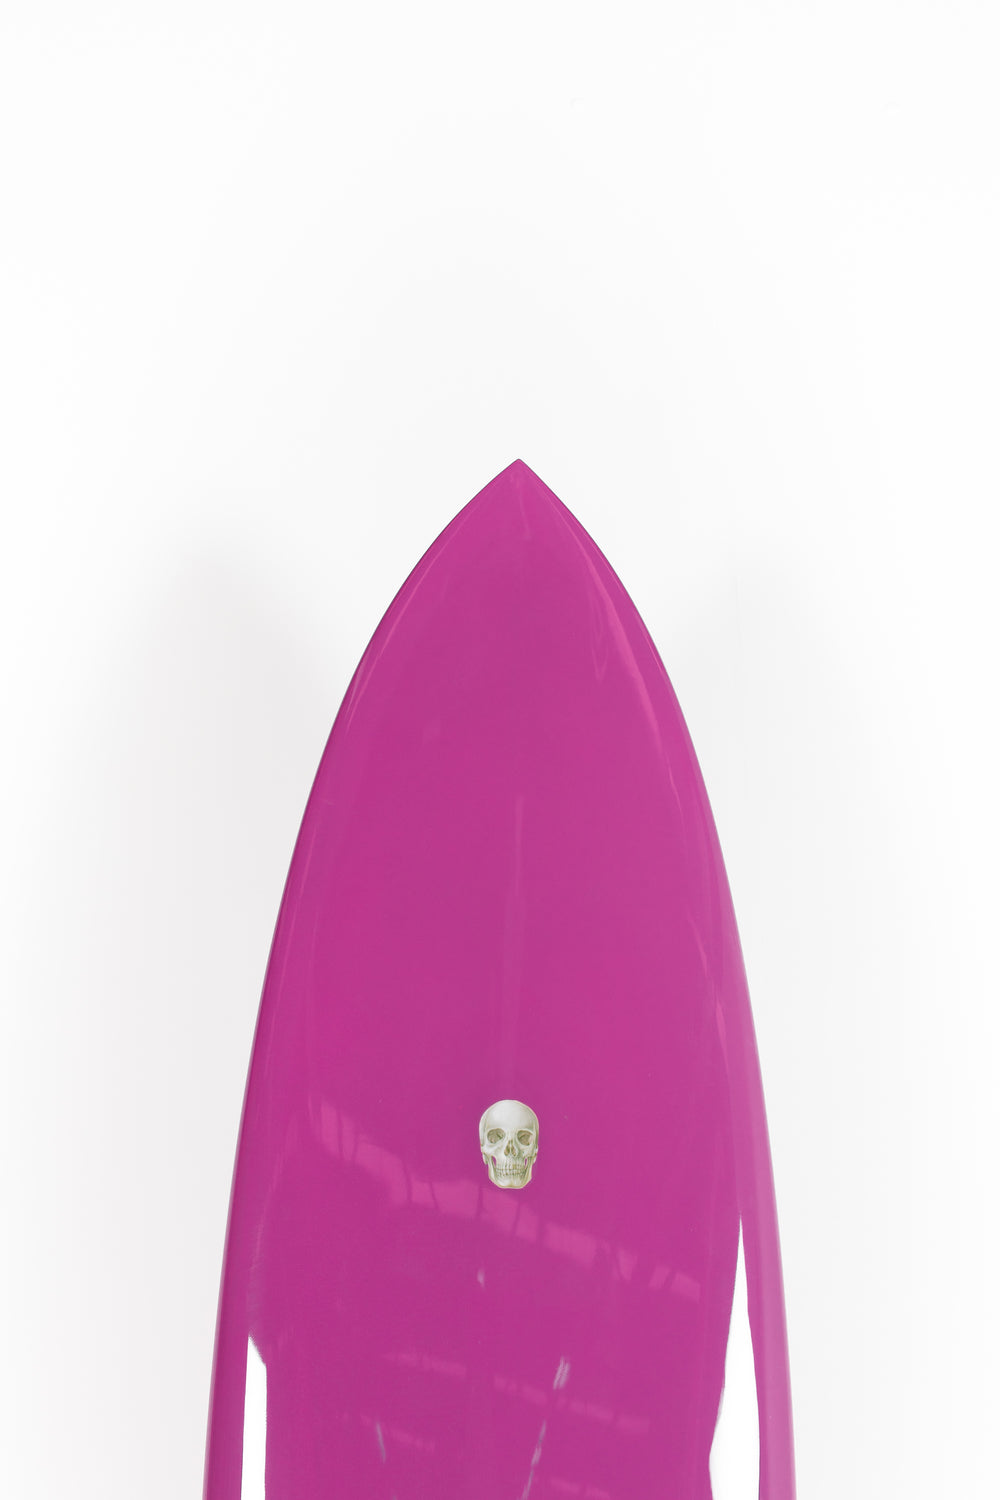 Christenson Surfboards - ULTRA TRACKER - 6'8